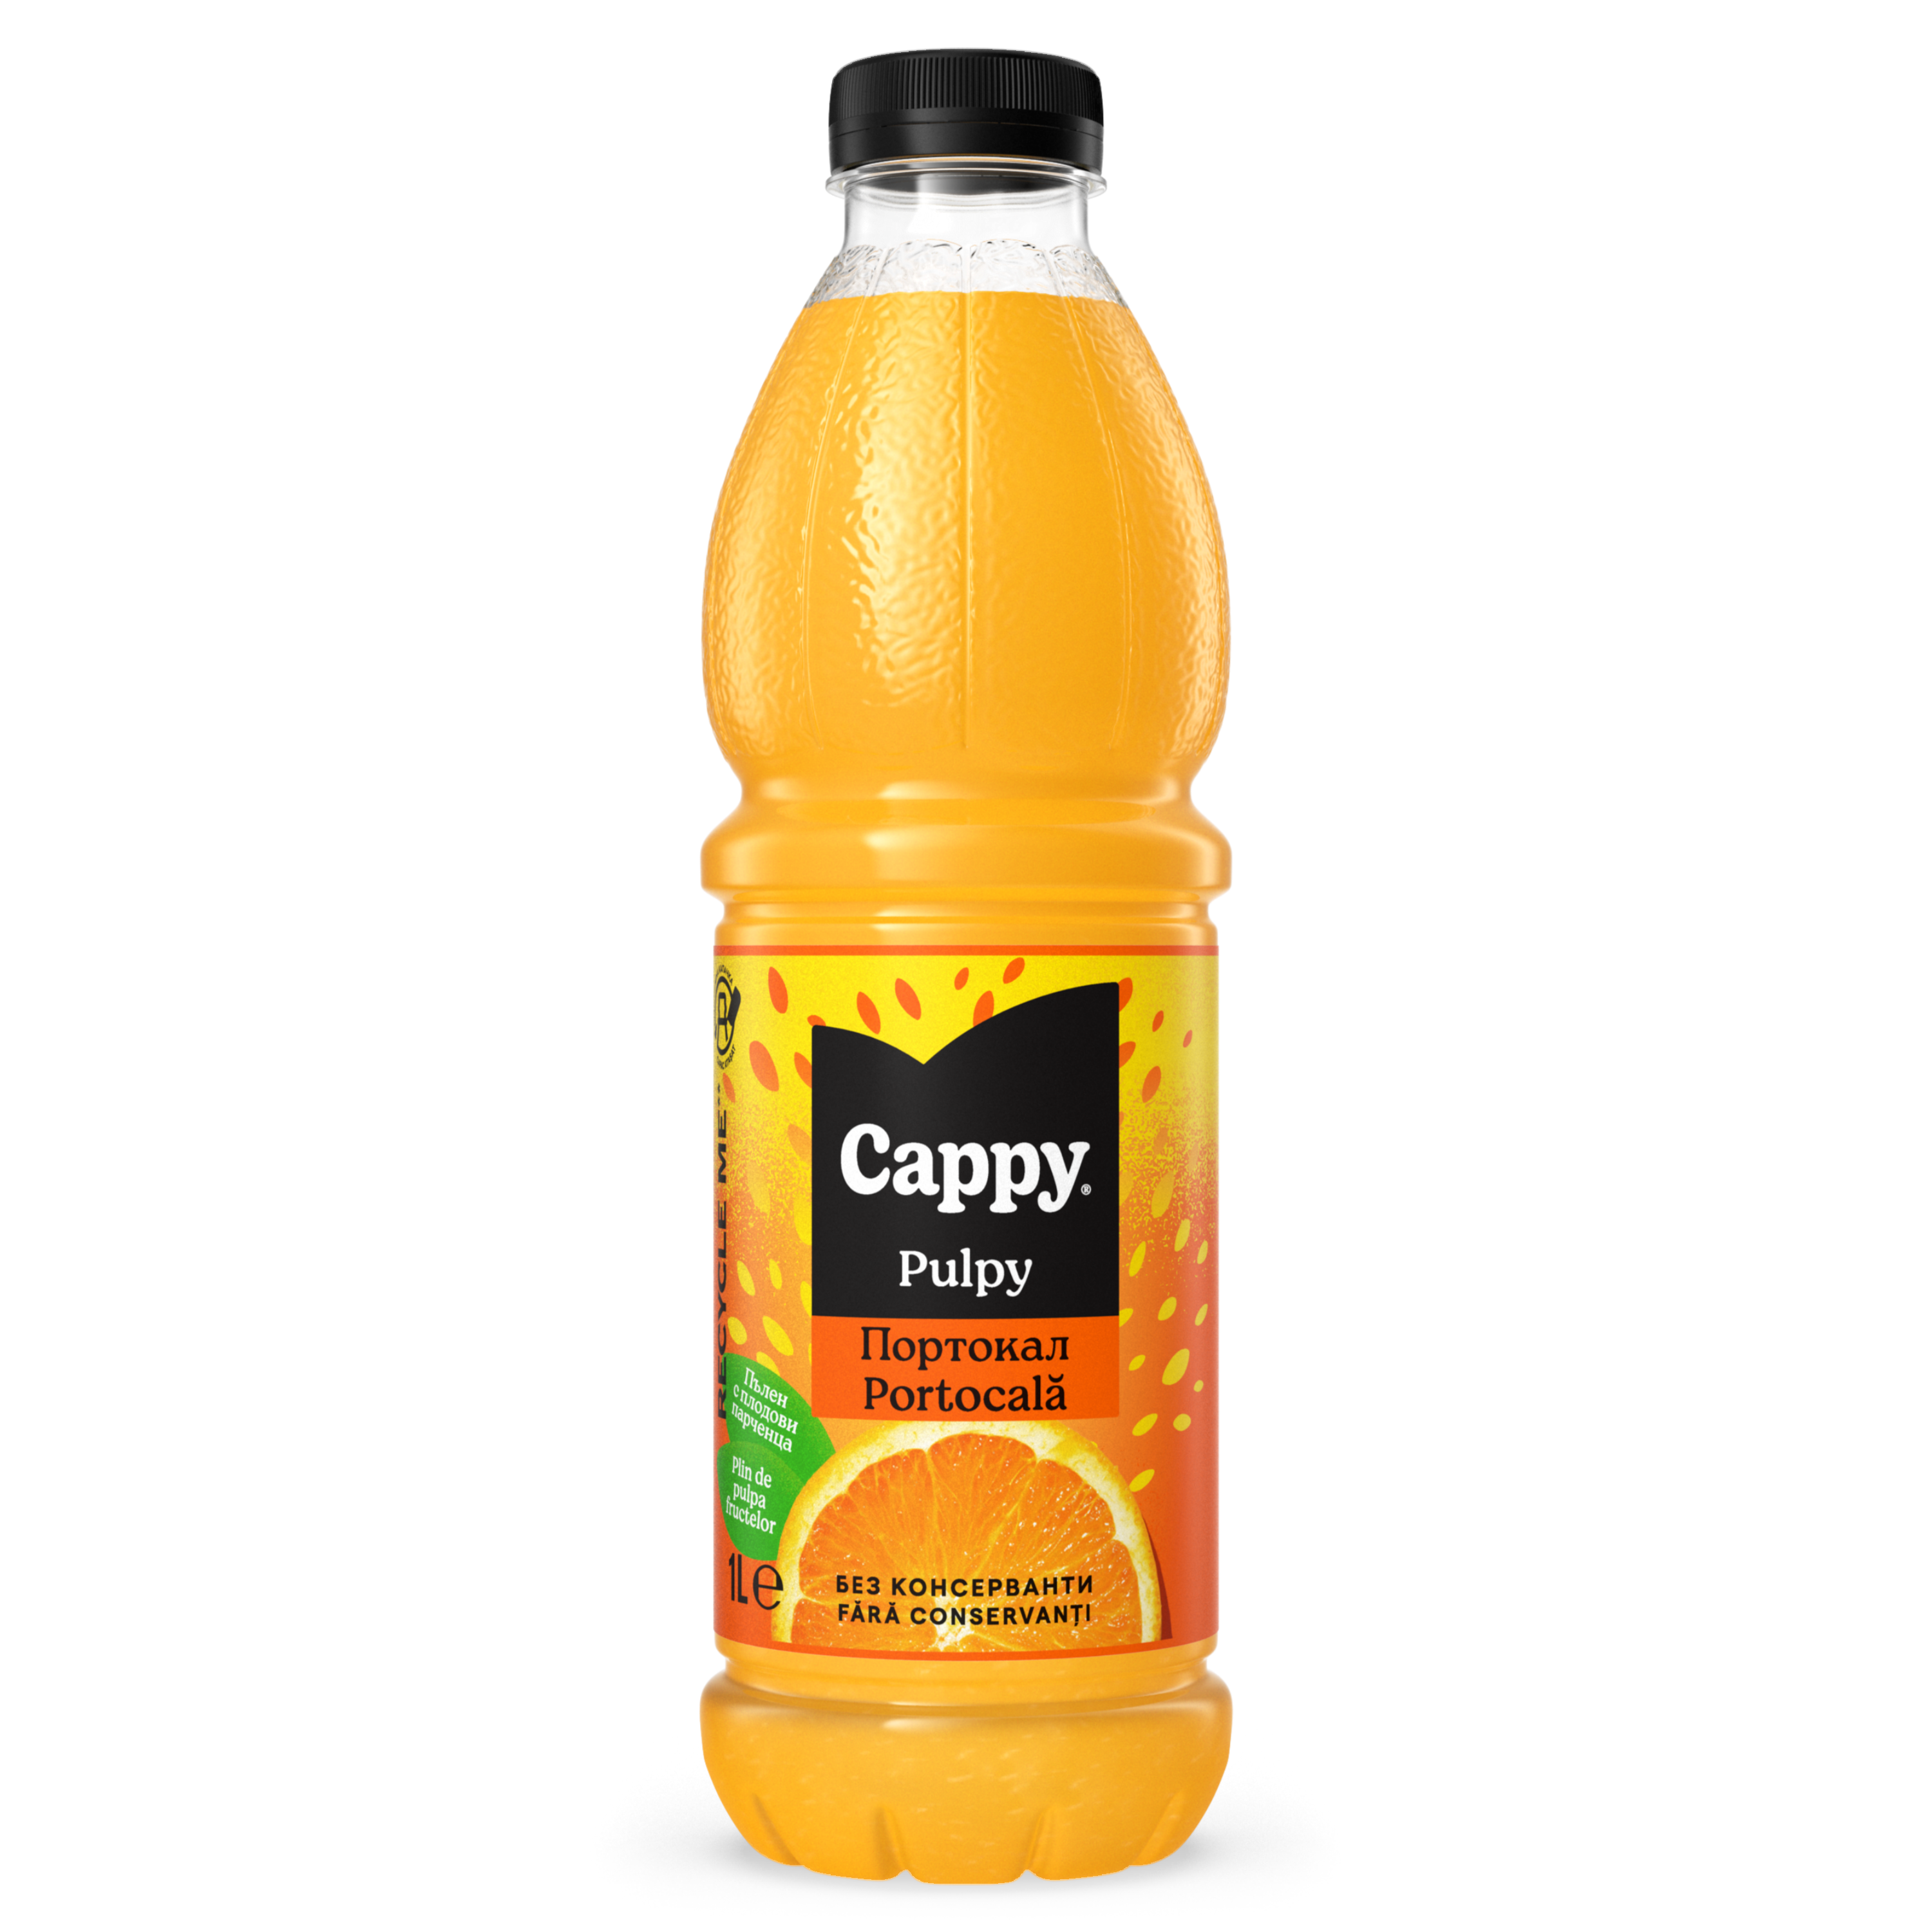 Cappy Pulpy Портокал